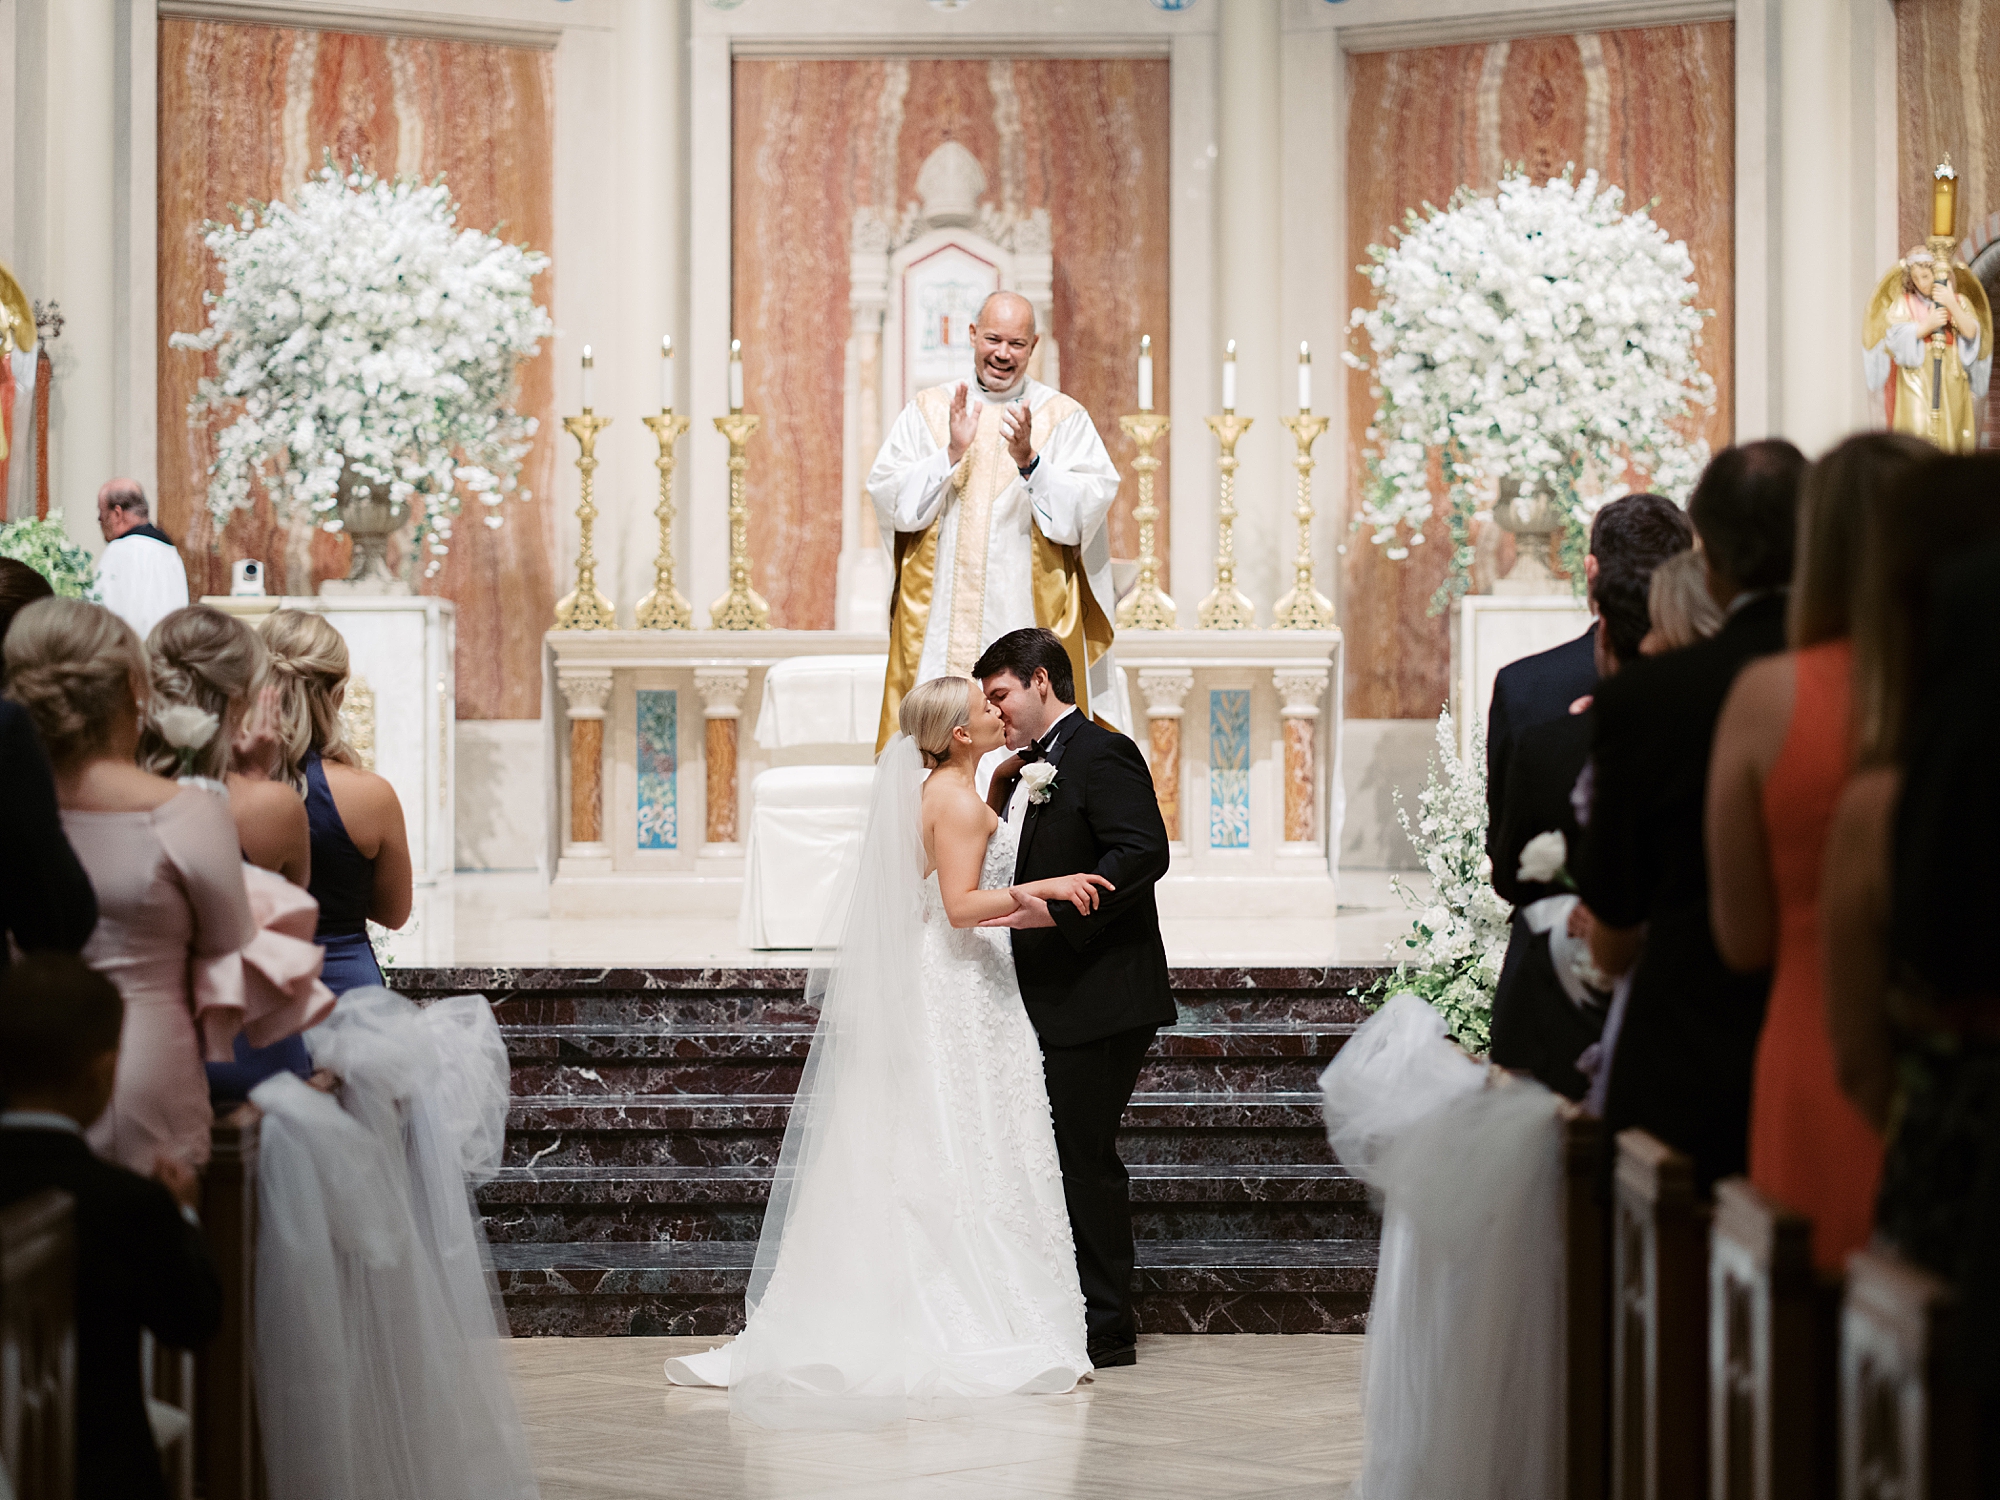 newlyweds kiss at alter after traditional Catholic Church wedding at St. John Cathedral